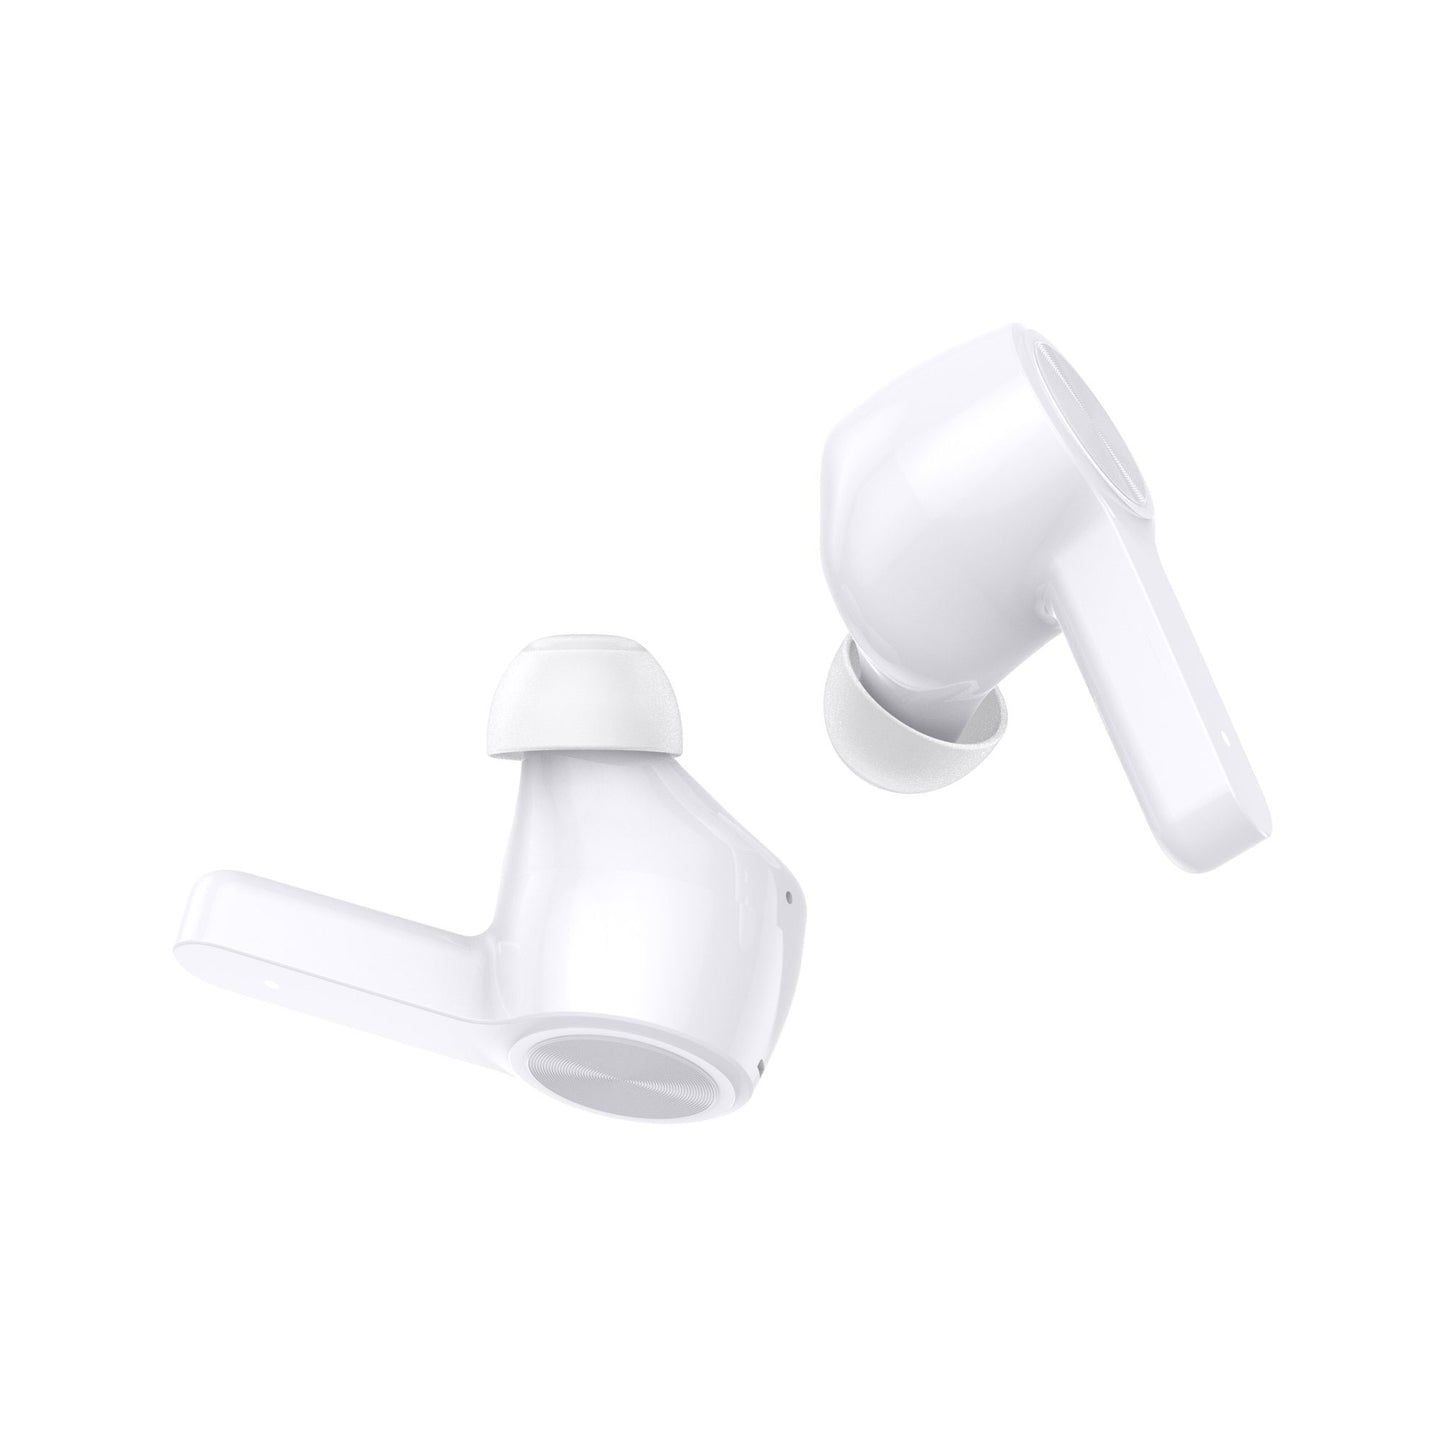 TWS Earphones Wireless Earbuds Headphones True Stereo Headset - ONY08